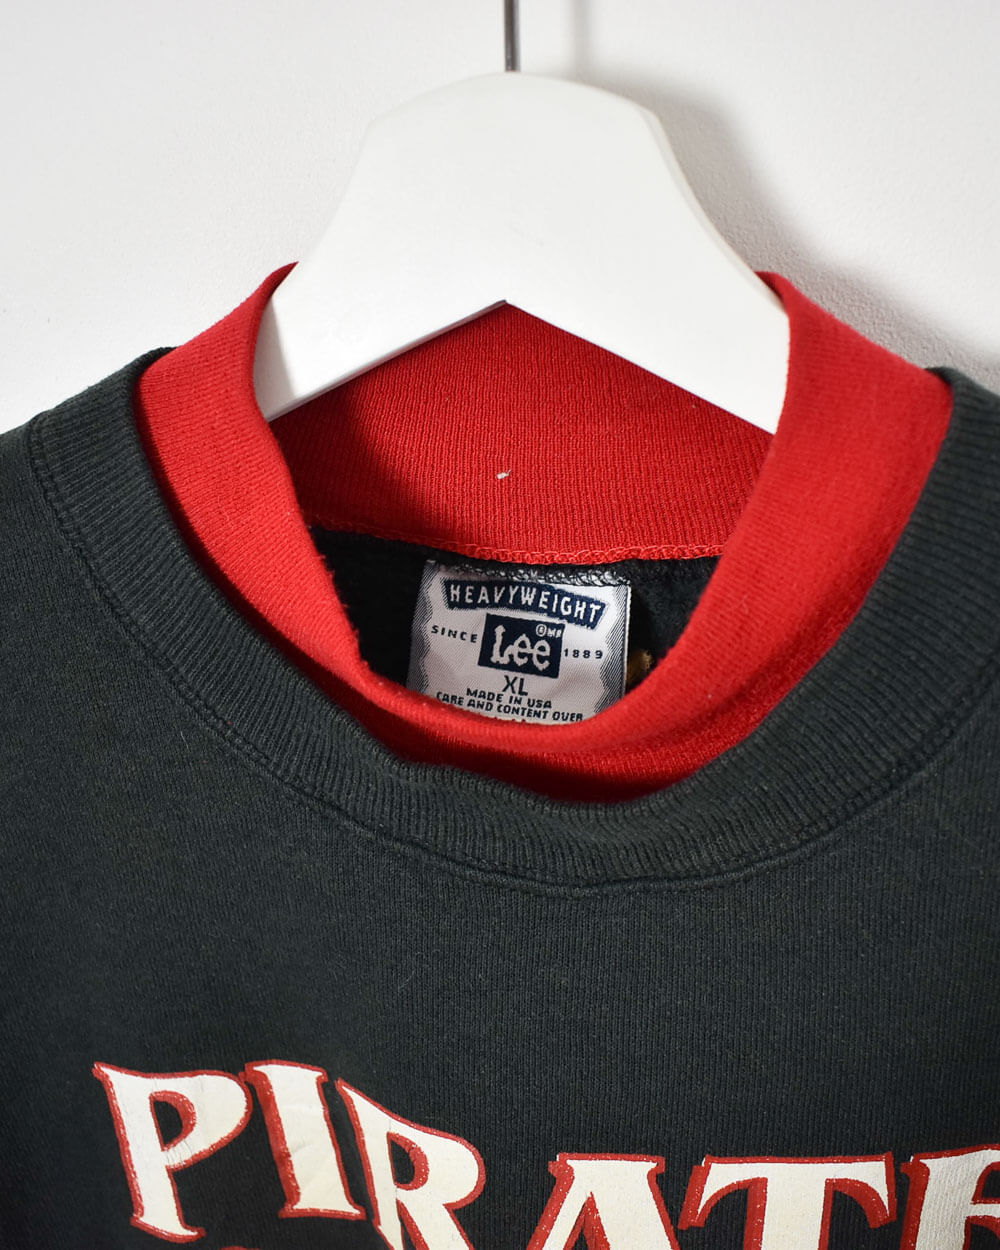 Lee Pirate Baseball 97 Sweatshirt - X-Large - Domno Vintage 90s, 80s, 00s Retro and Vintage Clothing 